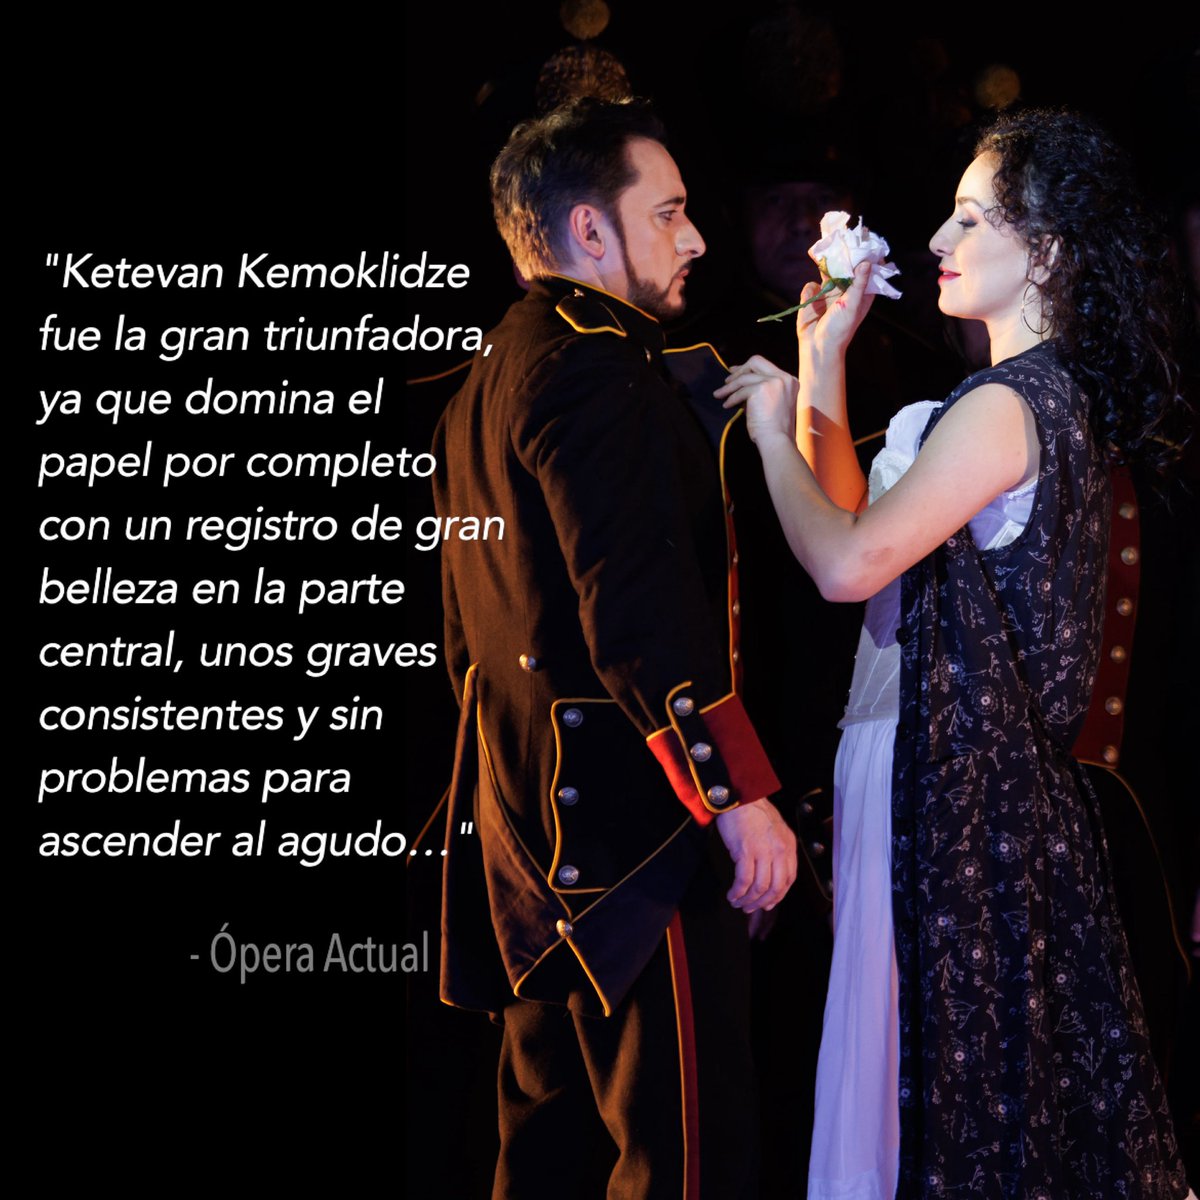 Review about my Carmen Navarrese 1️⃣

✍🏻 @OperaActual 

#ketevankemoklidze #music #opera #operasinger #ქეთევანქემოკლიძე #georgia #singing #bizet #art #carmen #mezzosoprano #spain #baluarte